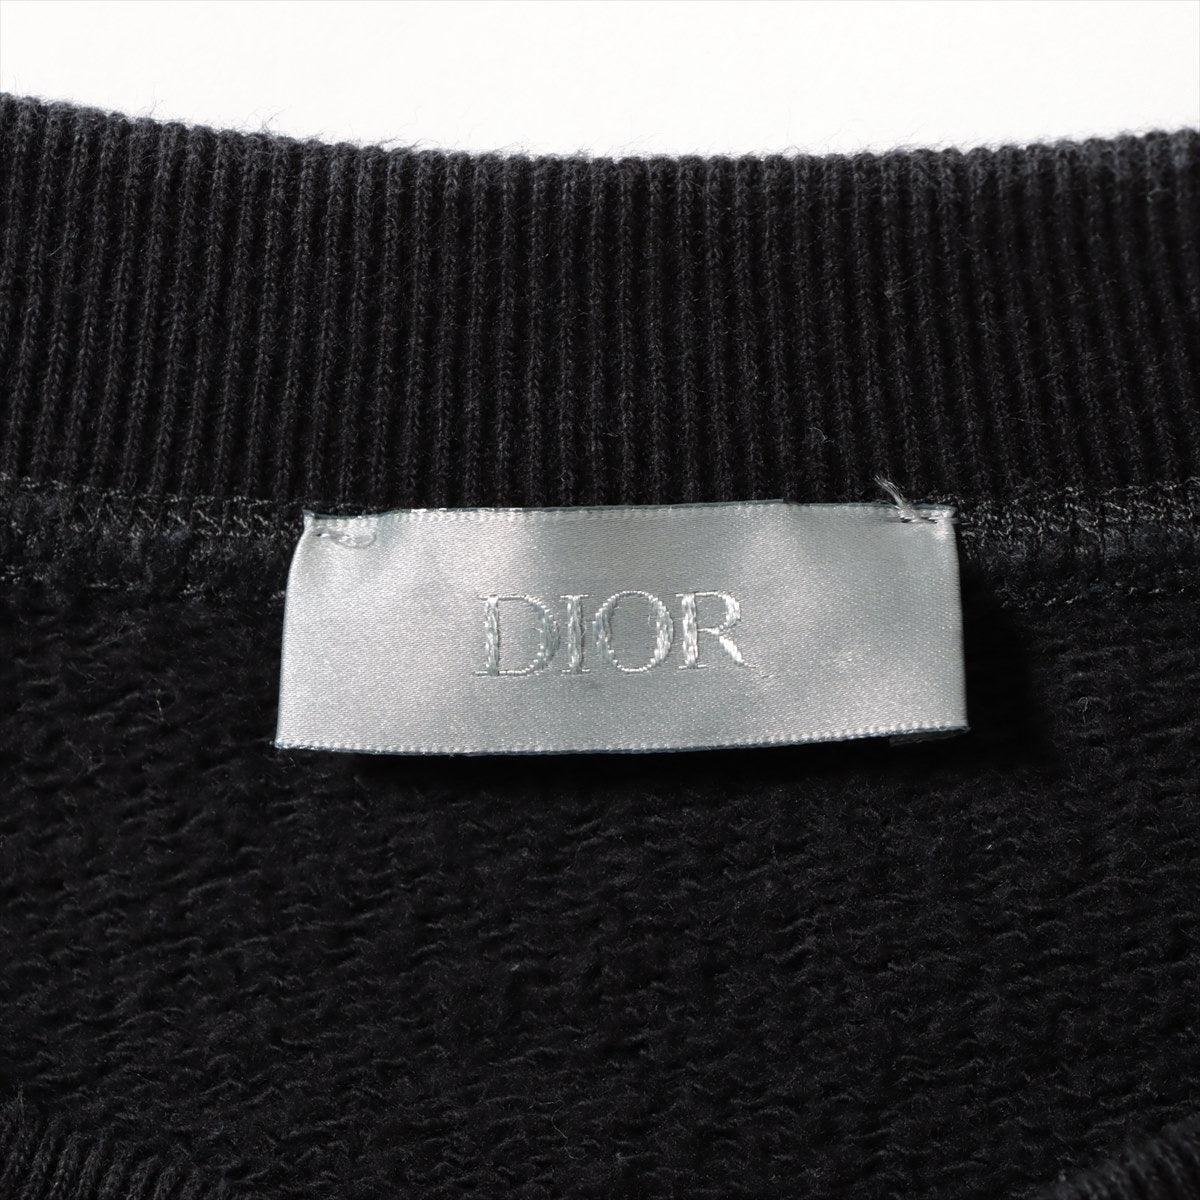 Dior x Sakai 21AW Cotton Basic knitted fabric L Men's Black  213J643A0687